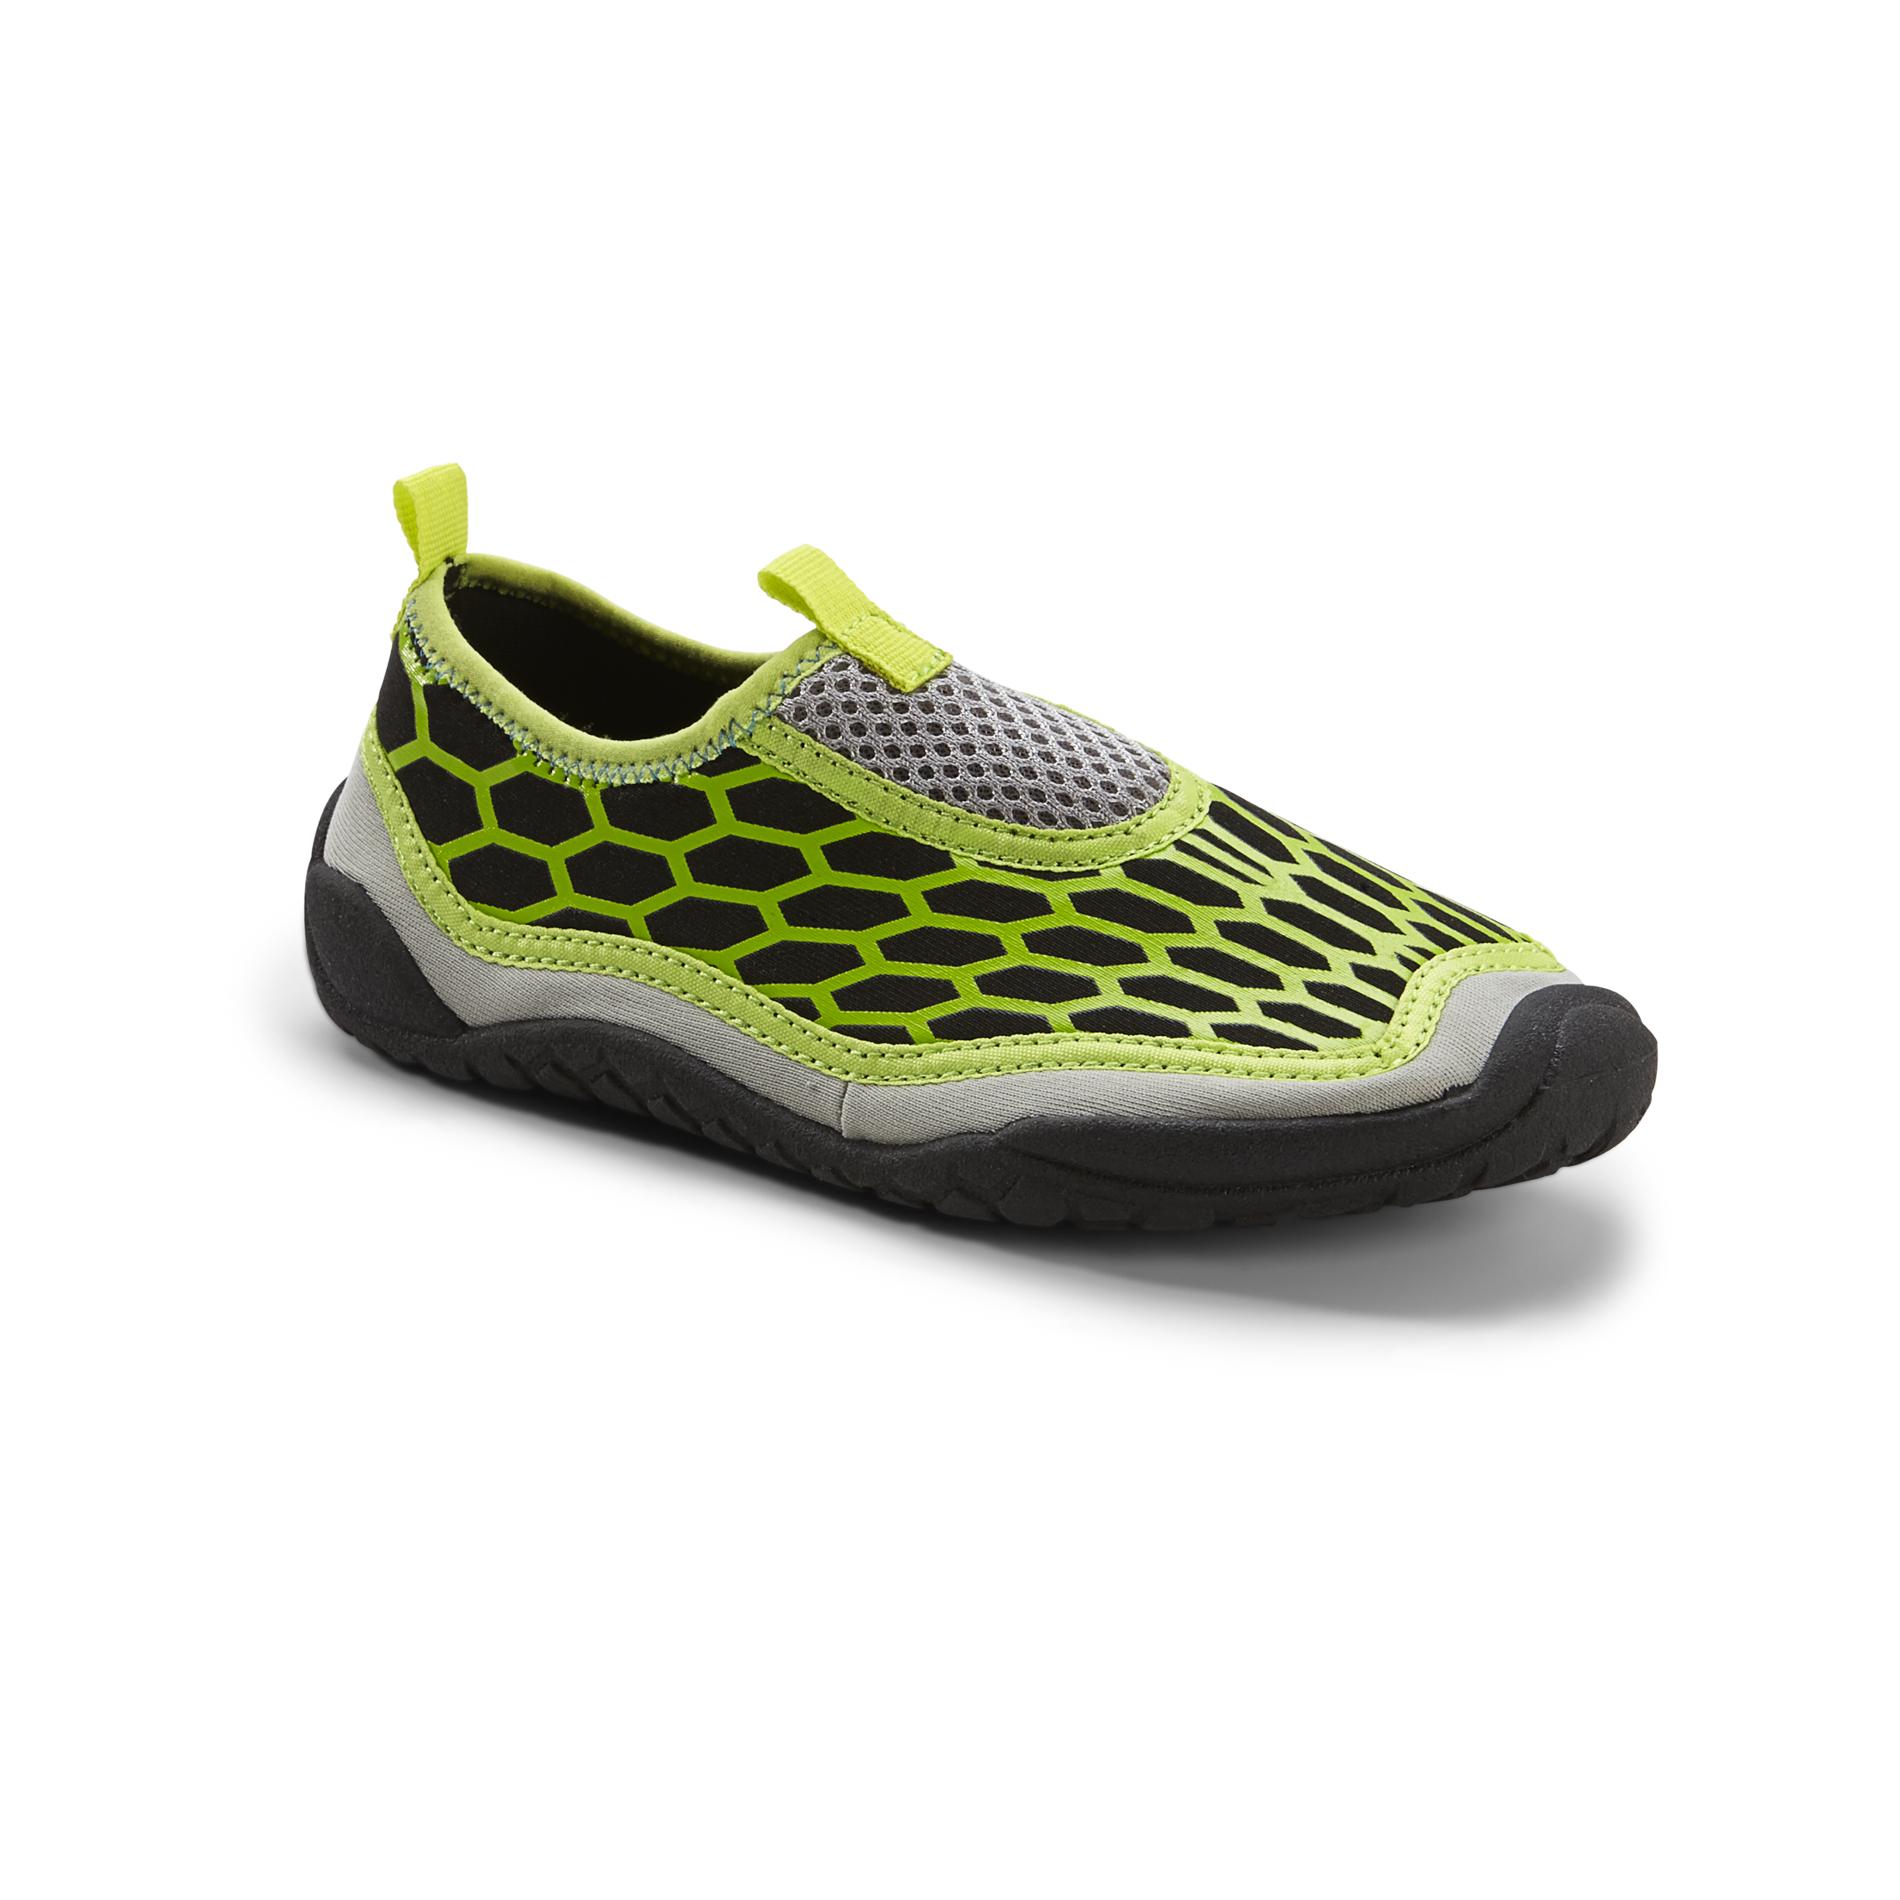 Athletech Boy's Ari Neon Green/Grey Water Shoe